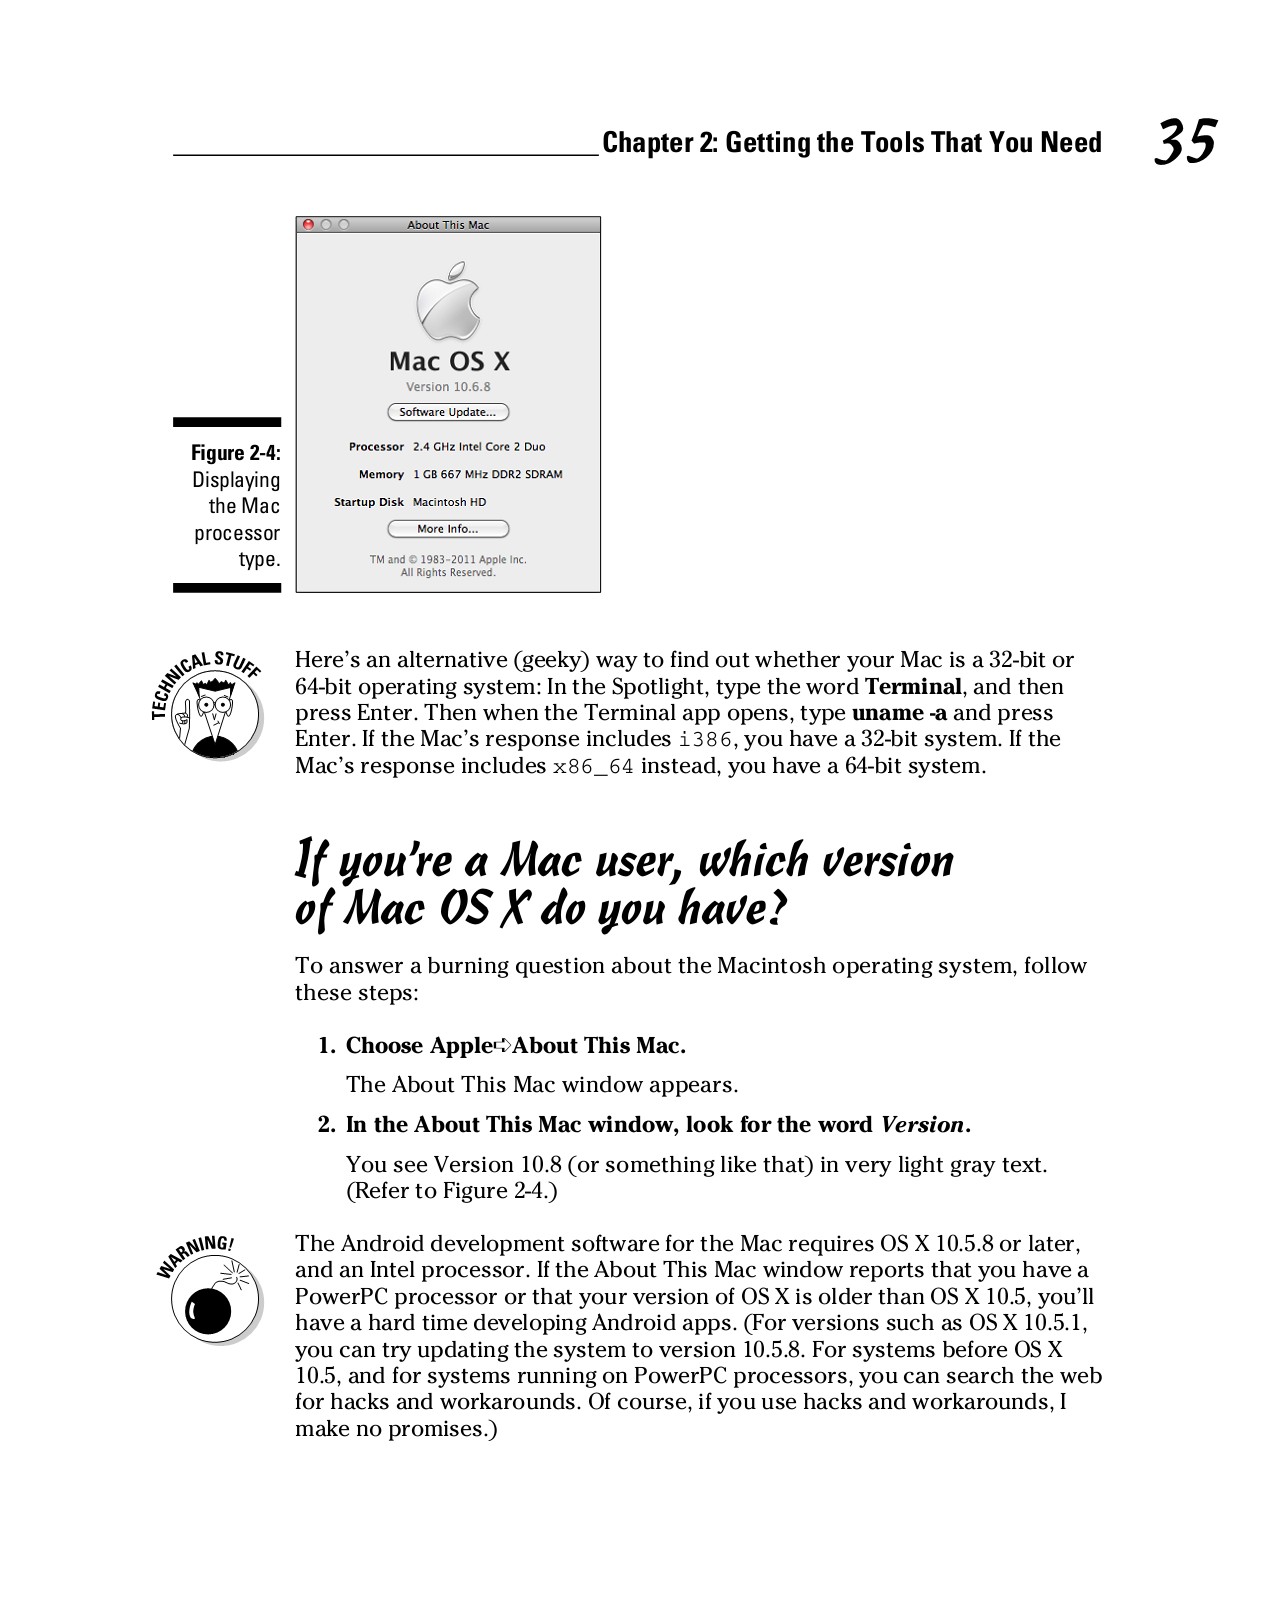 n64 emulator for mac 10.5.8